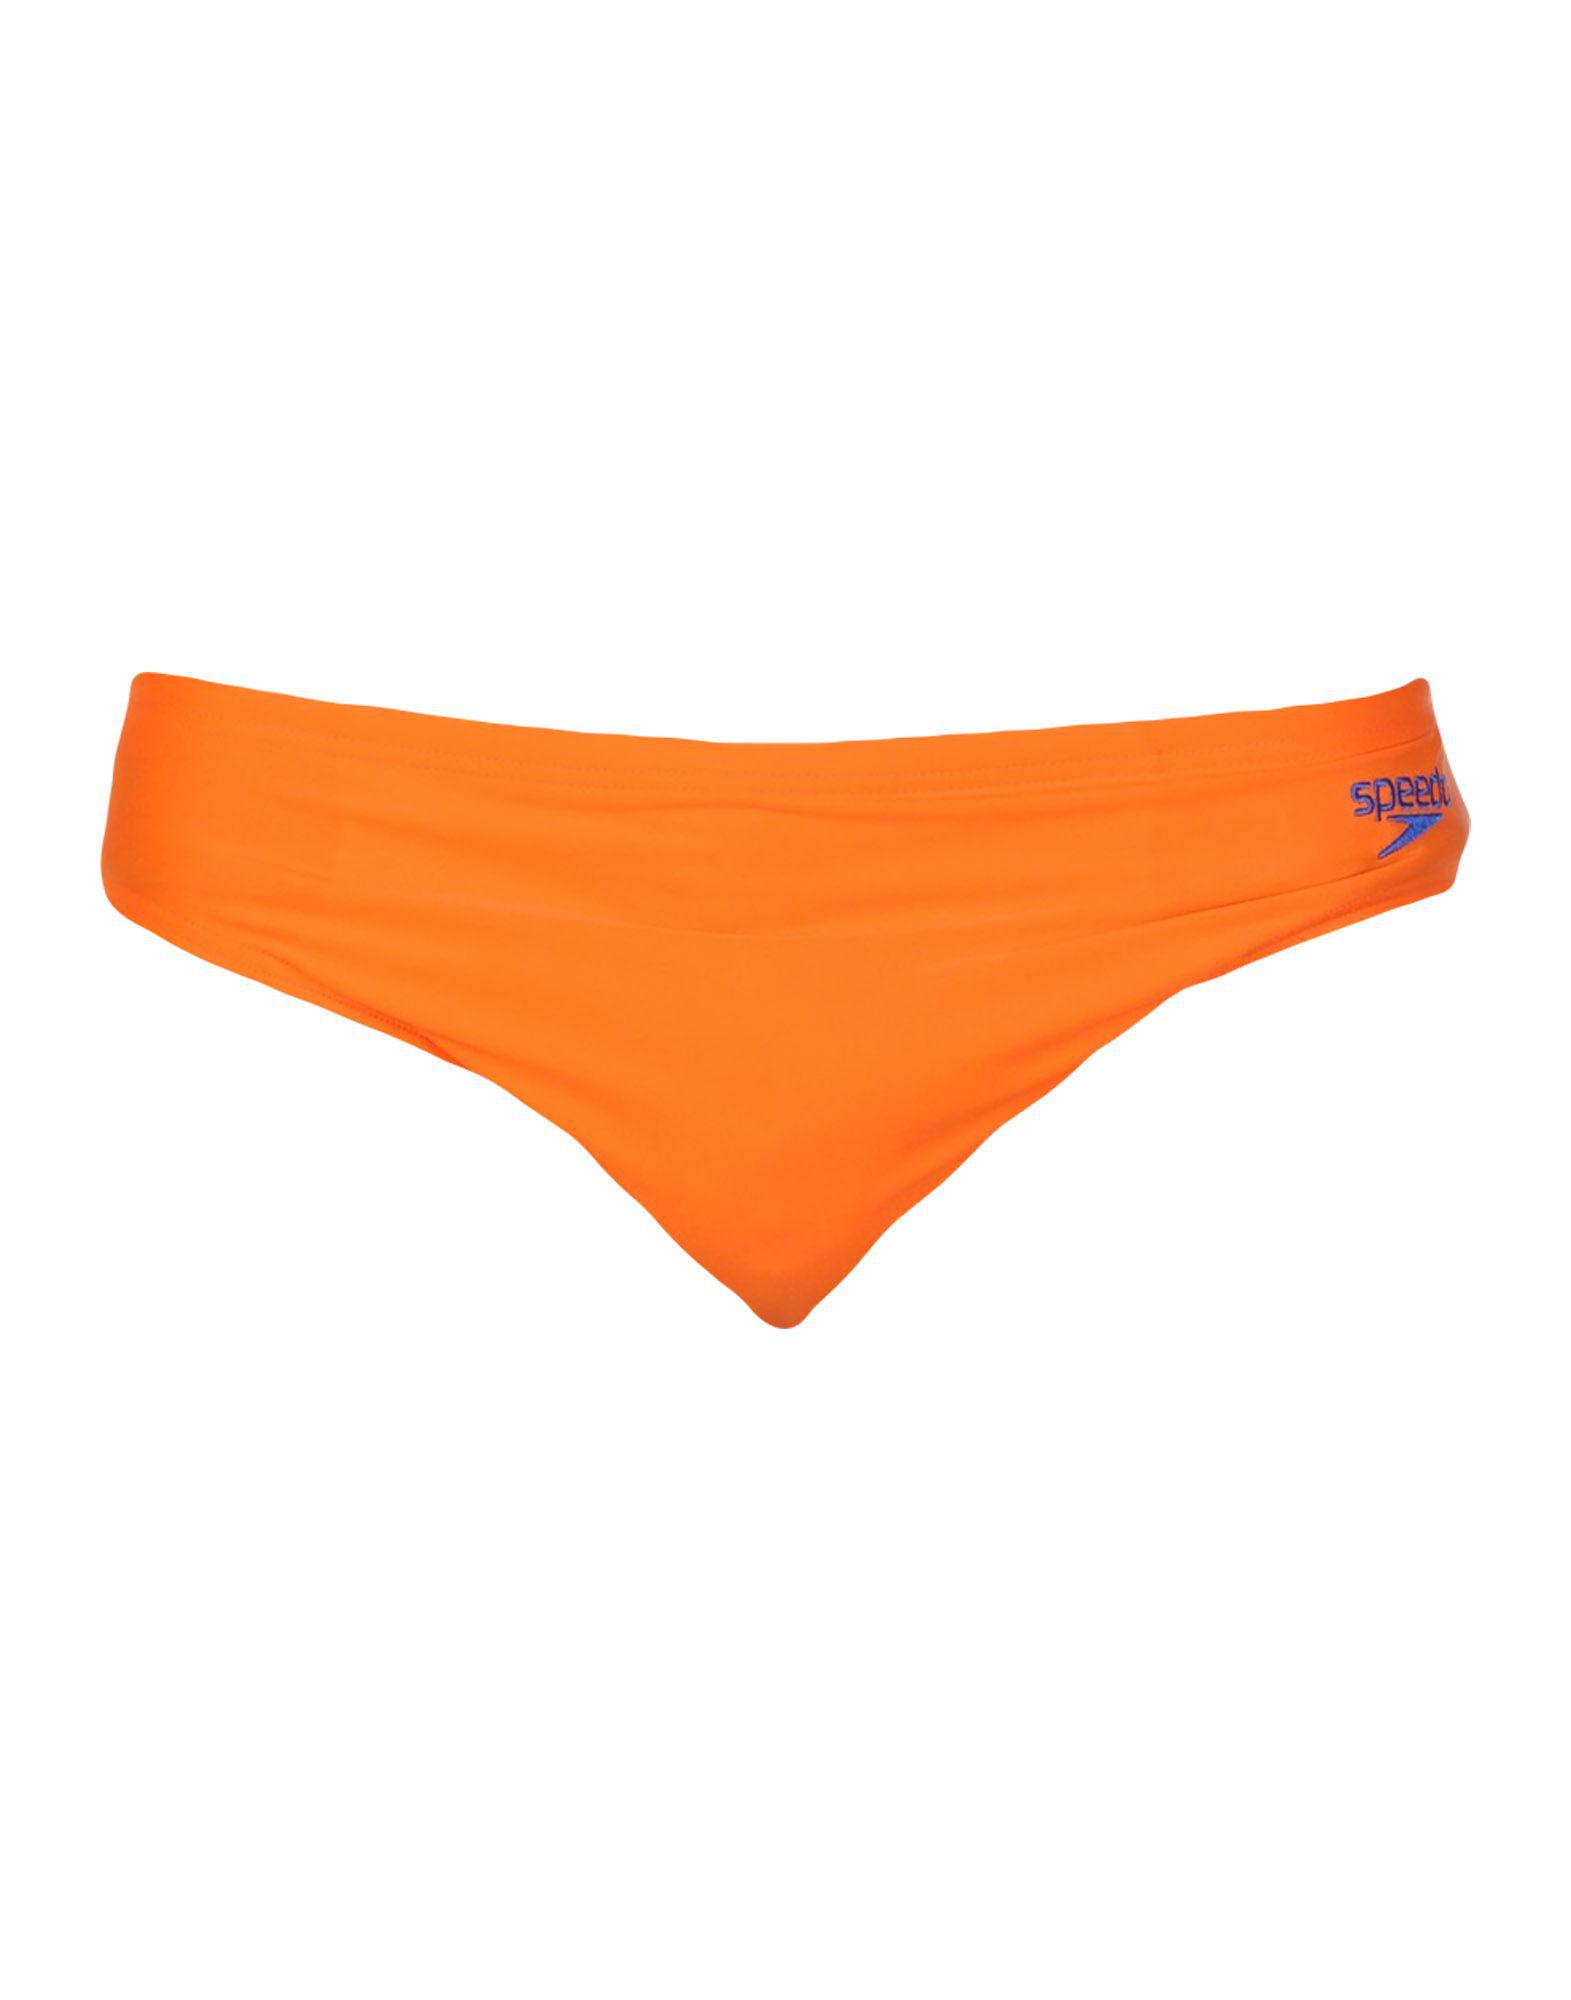 Costume Man Sea speedo briefs Pool 808354c651 Endurance Orange Orange 